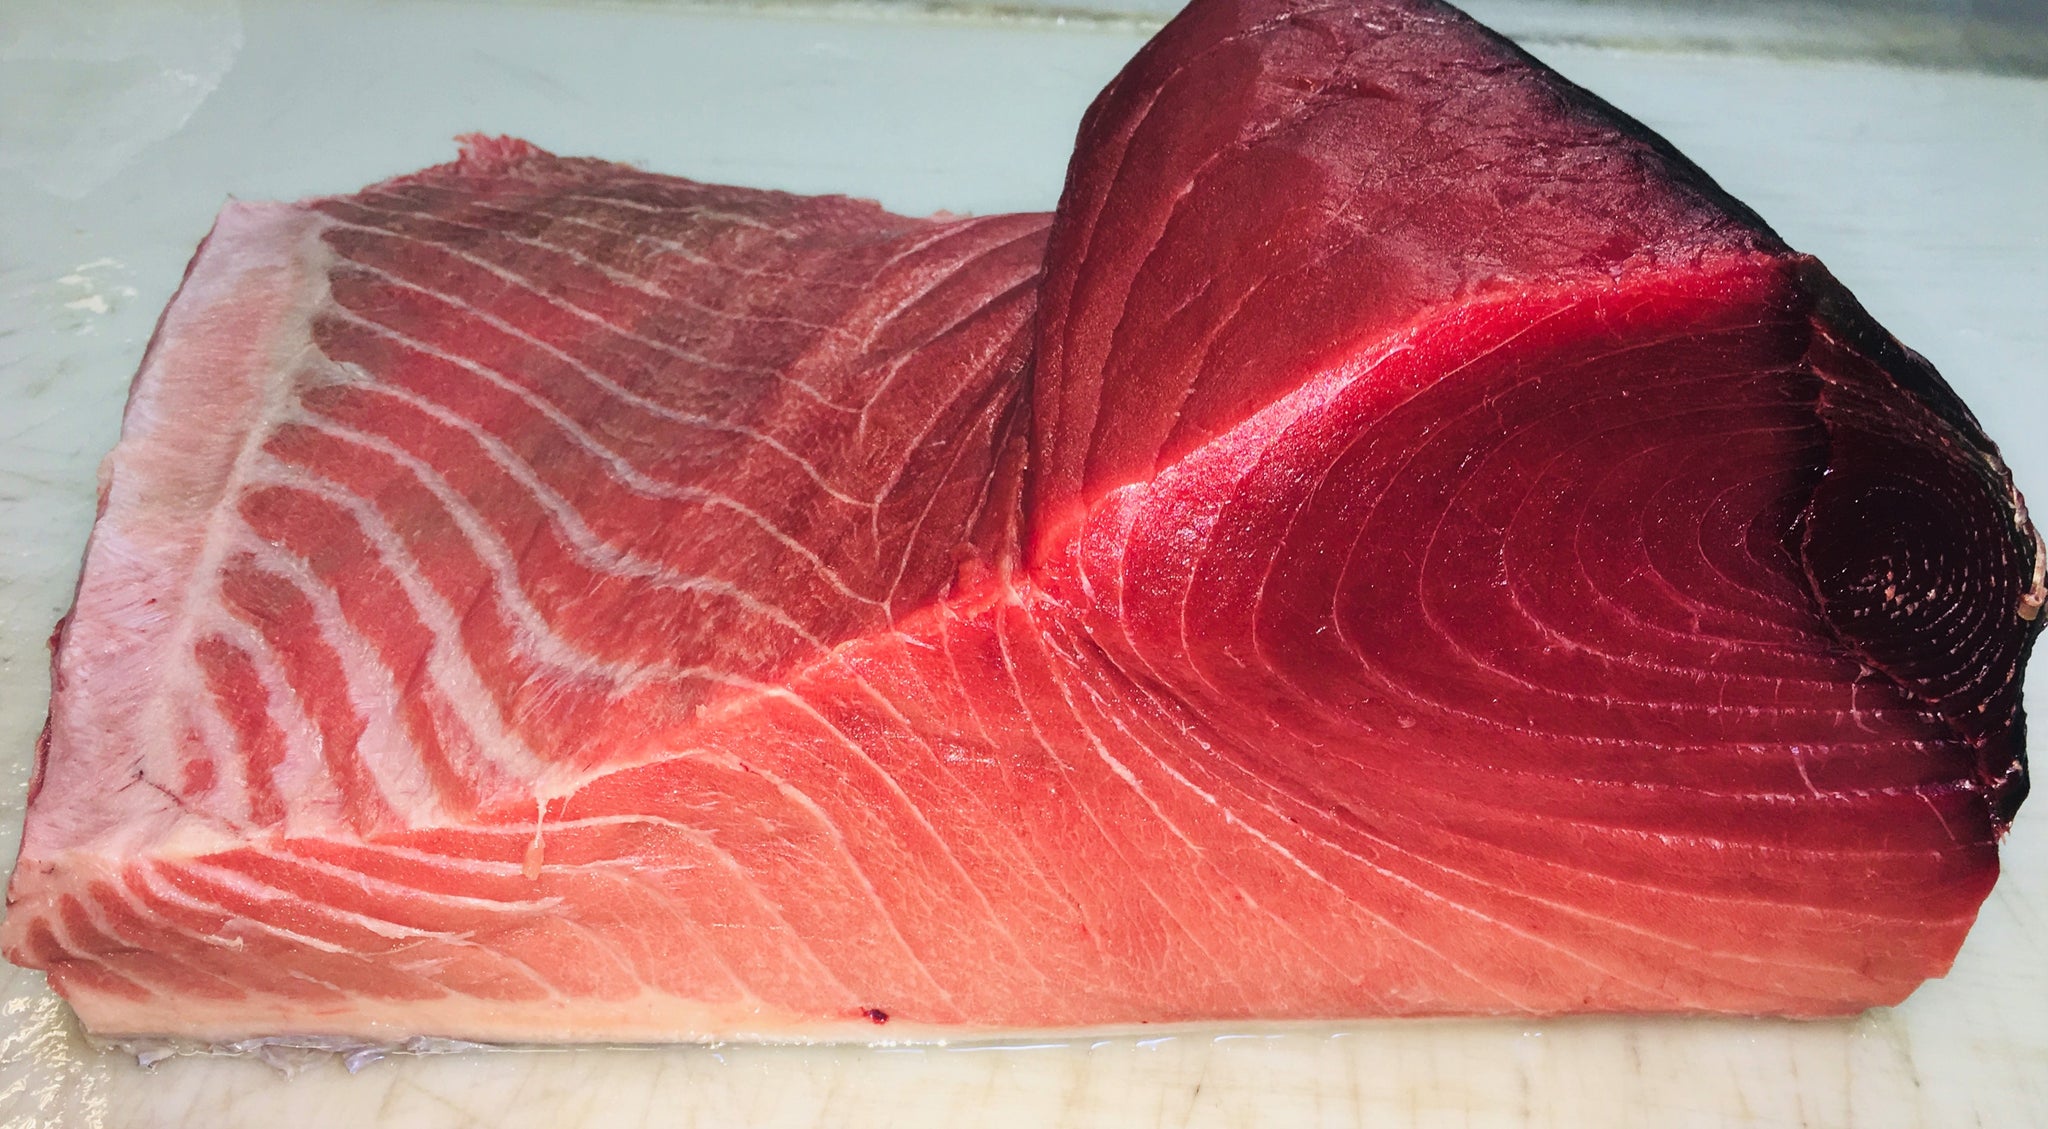 Bluefin Tuna - Wild Pacific (Southern California) - avg 1 lb